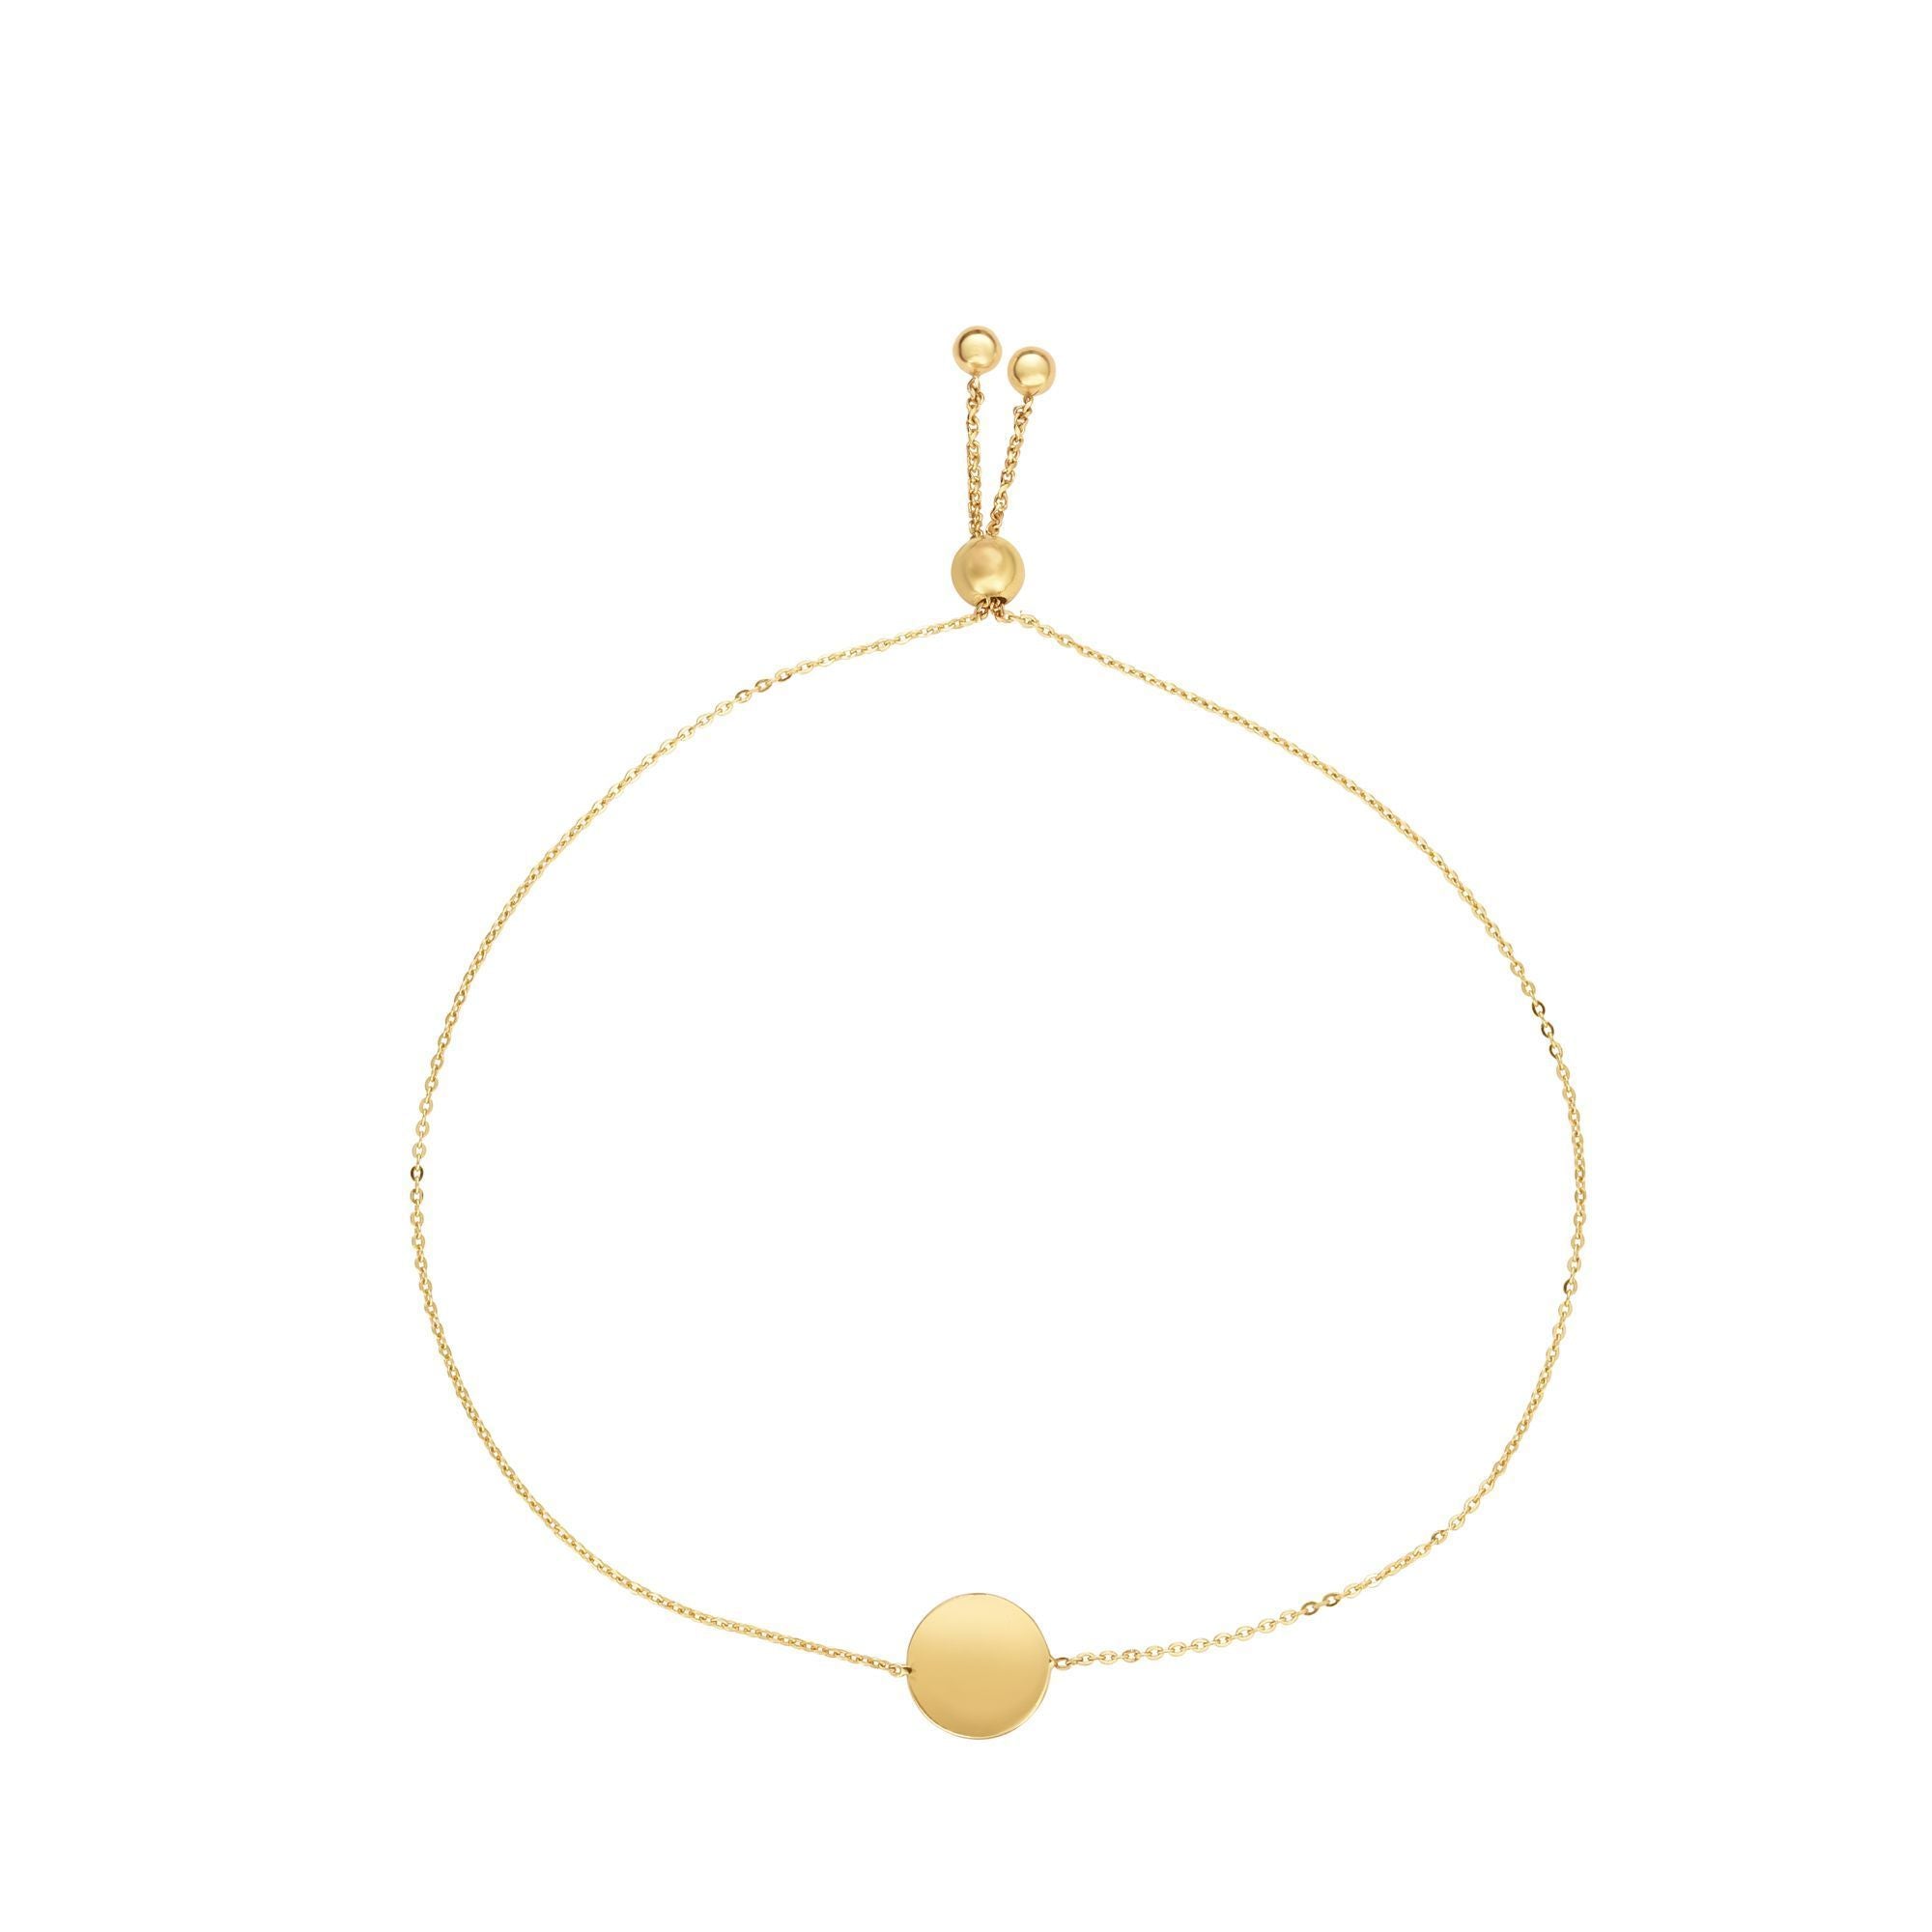 14k Yellow Gold Adjustable Round Charm Bolo Friendship Bracelet, 9.25" fine designer jewelry for men and women